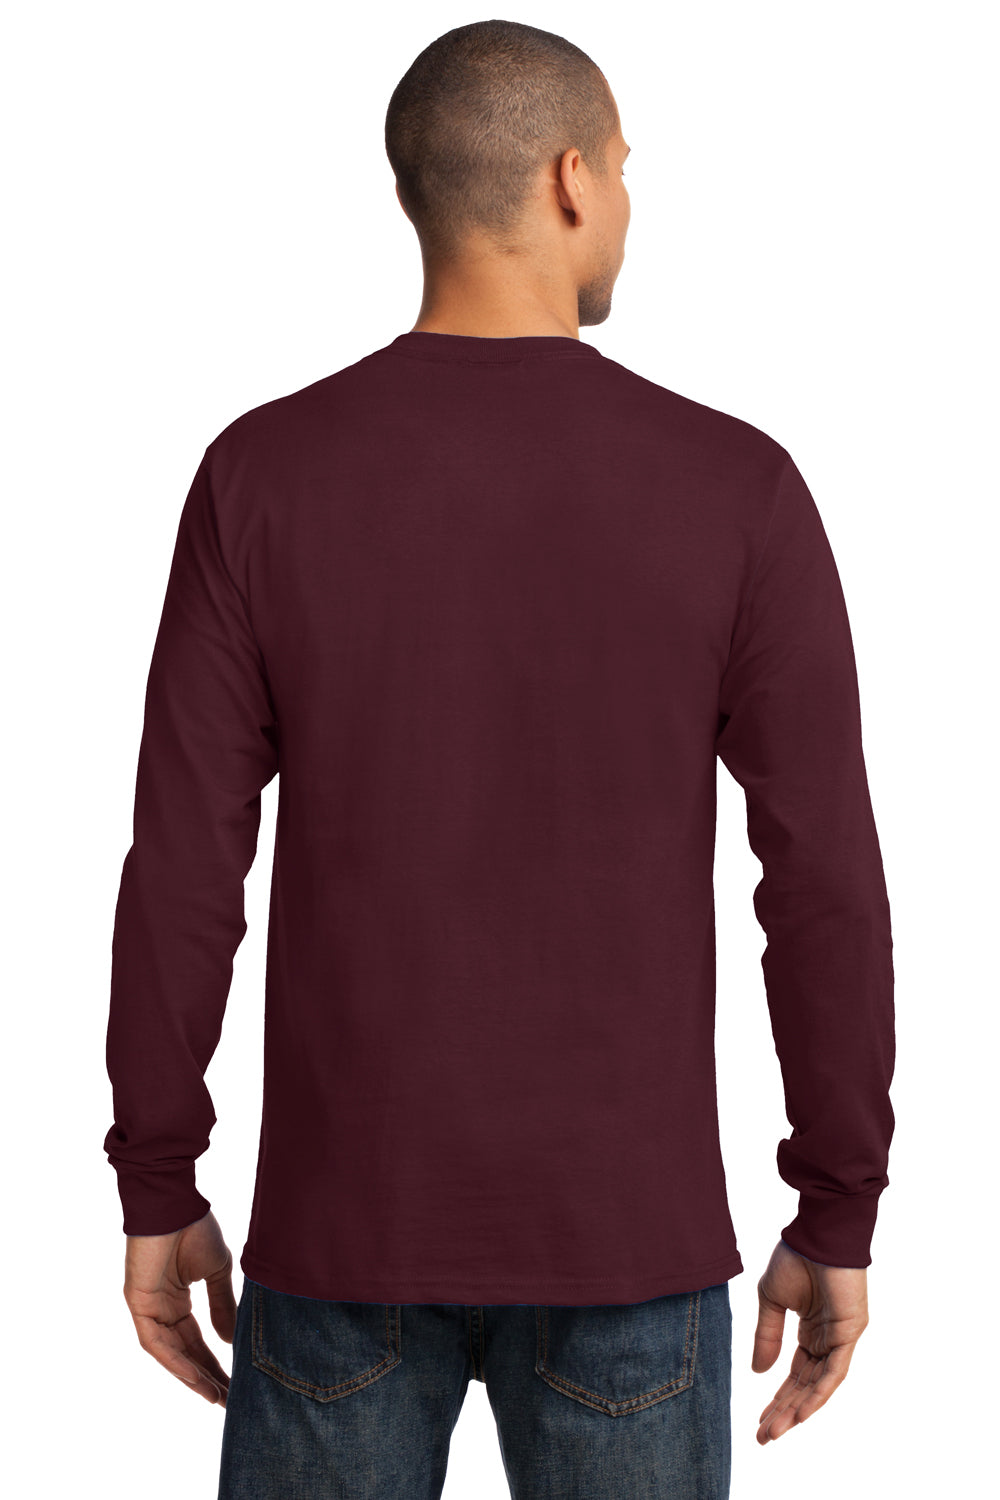 Port & Company PC61LS Mens Essential Long Sleeve Crewneck T-Shirt Maroon Back